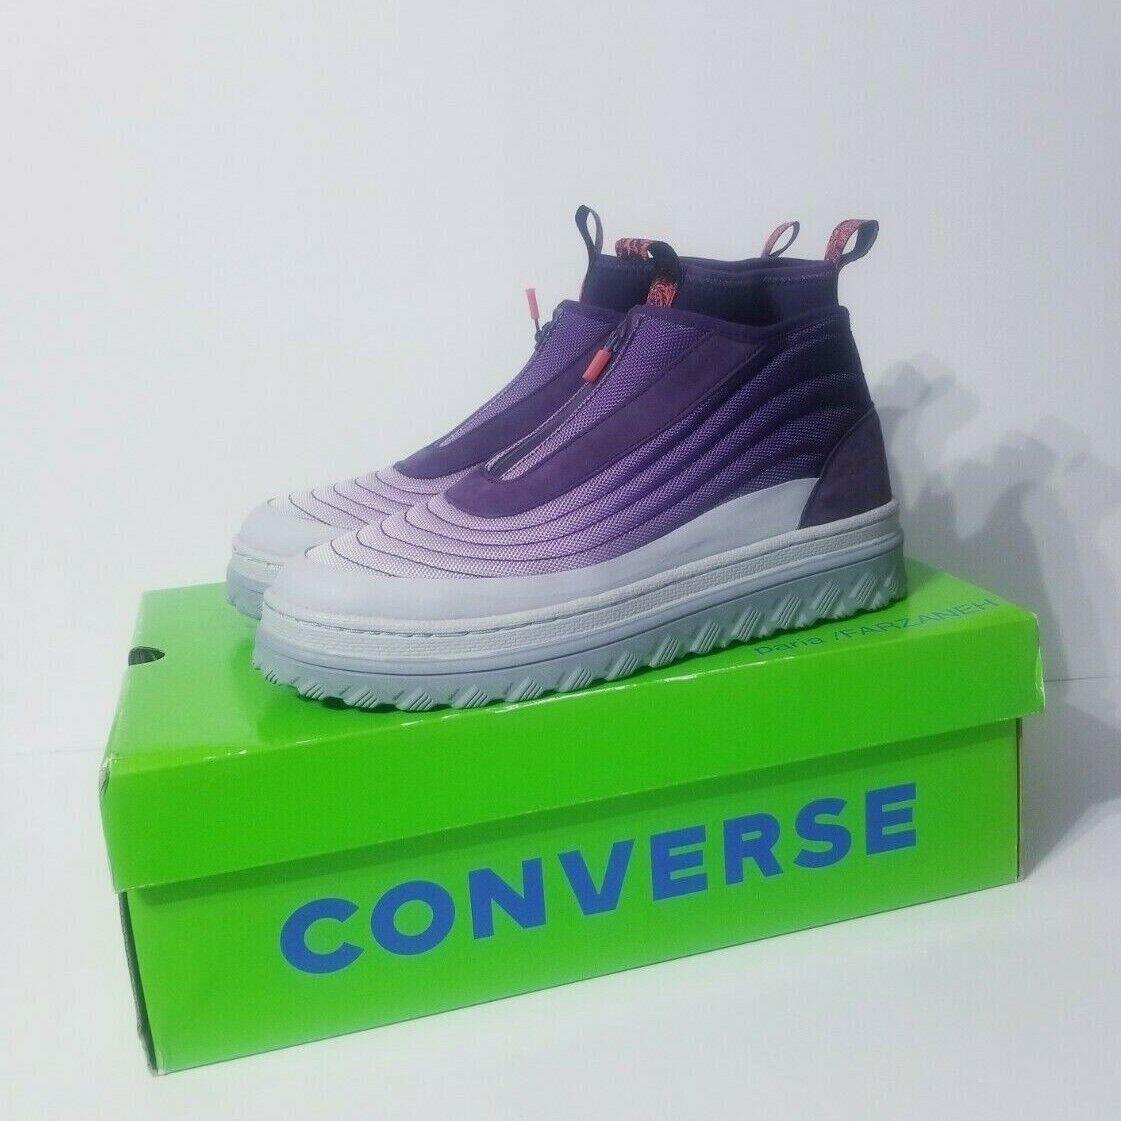 Converse Pro Leather X2 Trek HI Paria Faraneh 171842C Purple Shoes Mens Wmns Sz